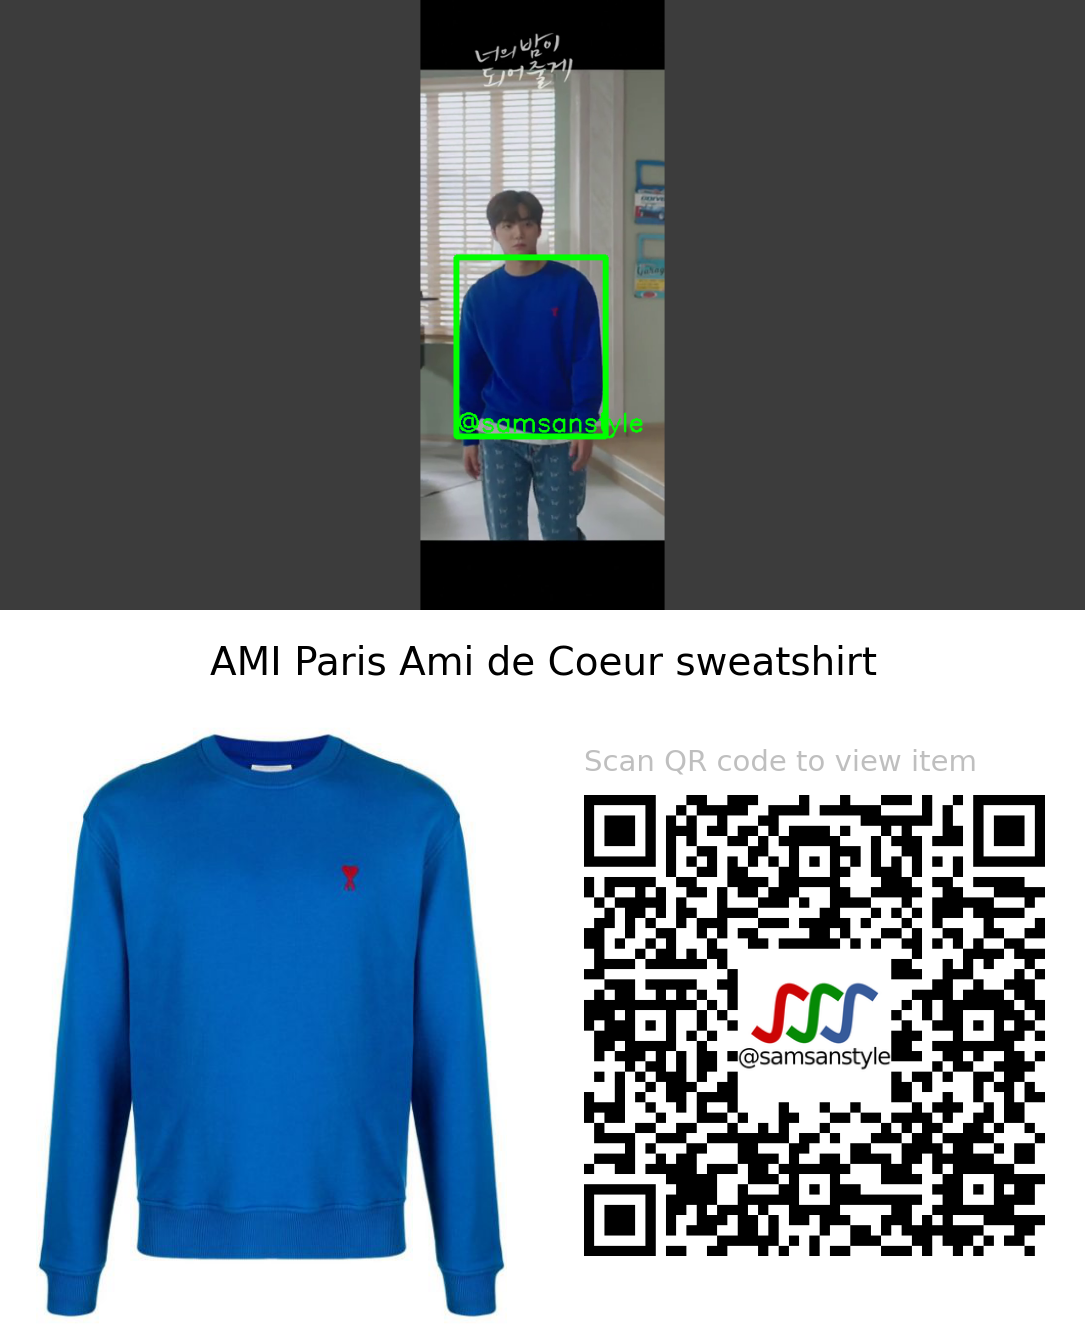 JR | Let Me Be Your Knight E02 | AMI Paris Ami de Coeur sweatshirt